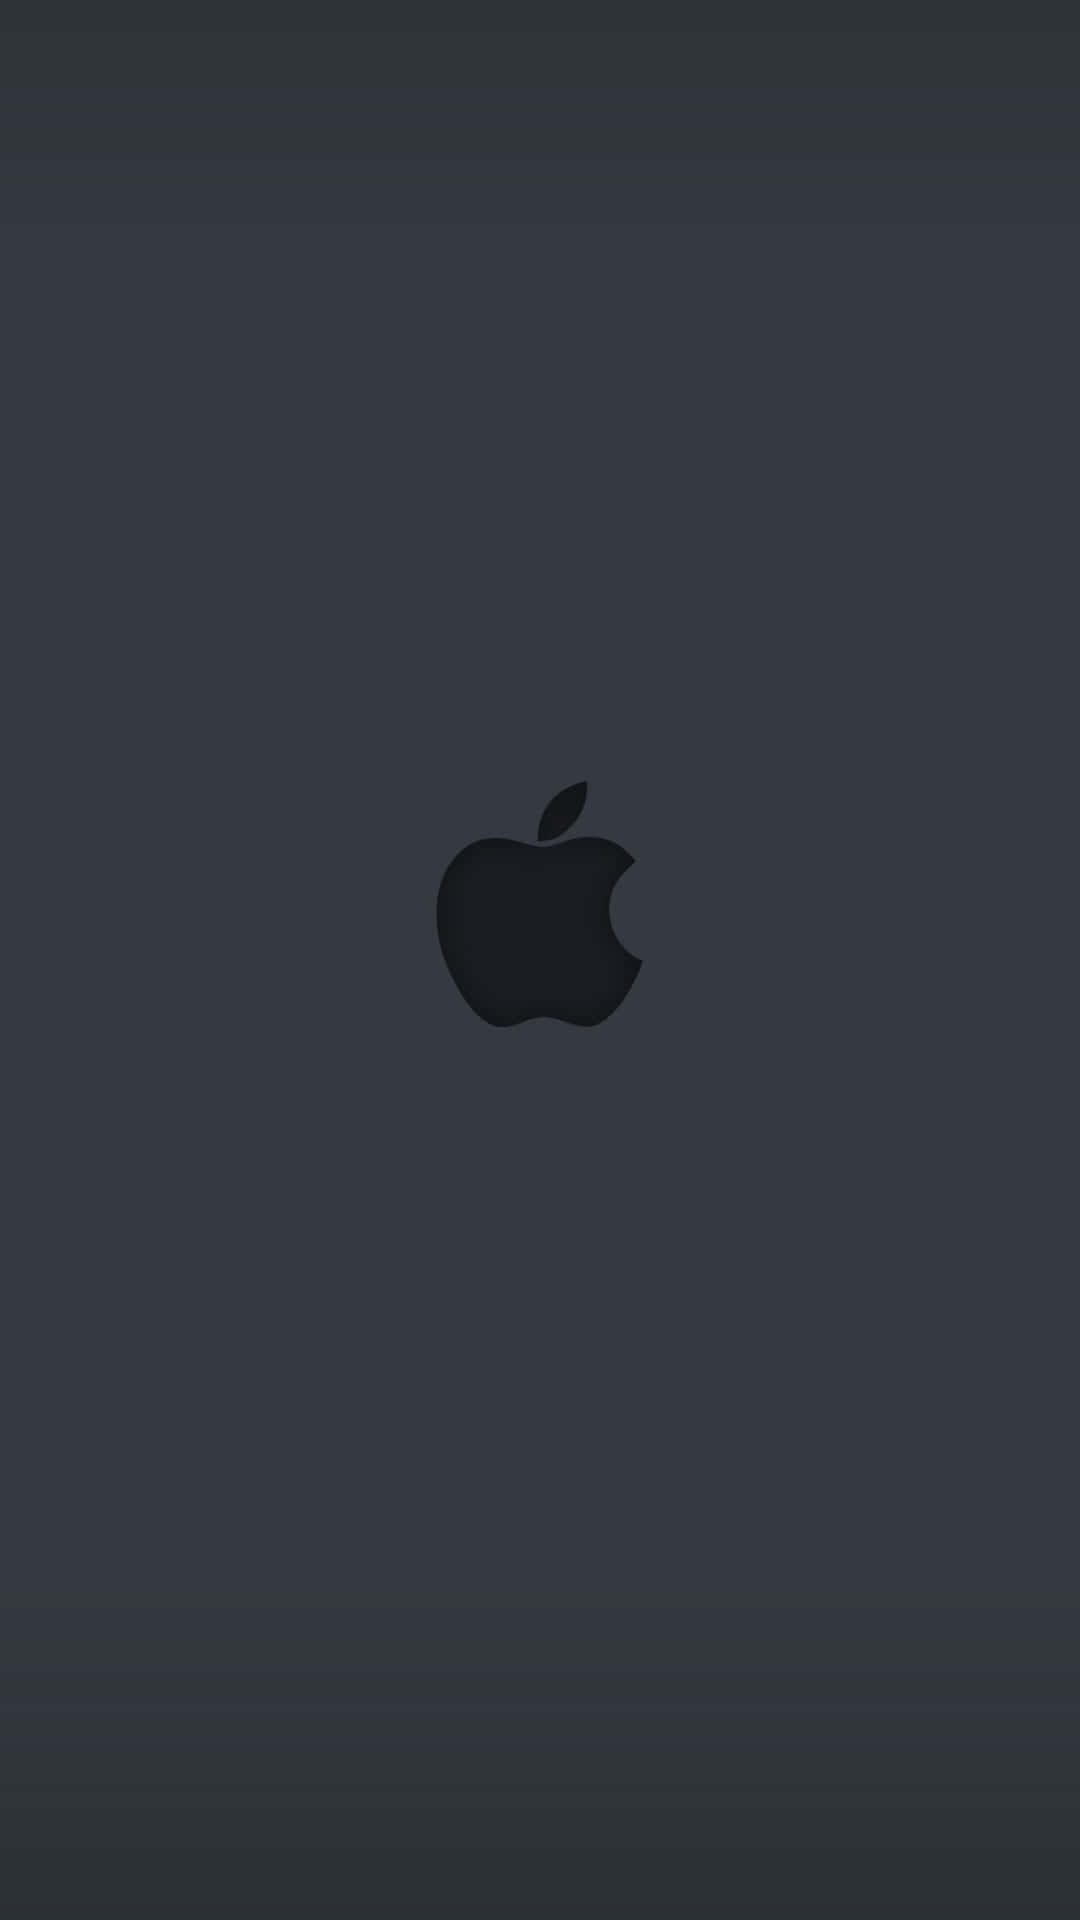 Black Apple Logo In Simple Gray Wallpaper